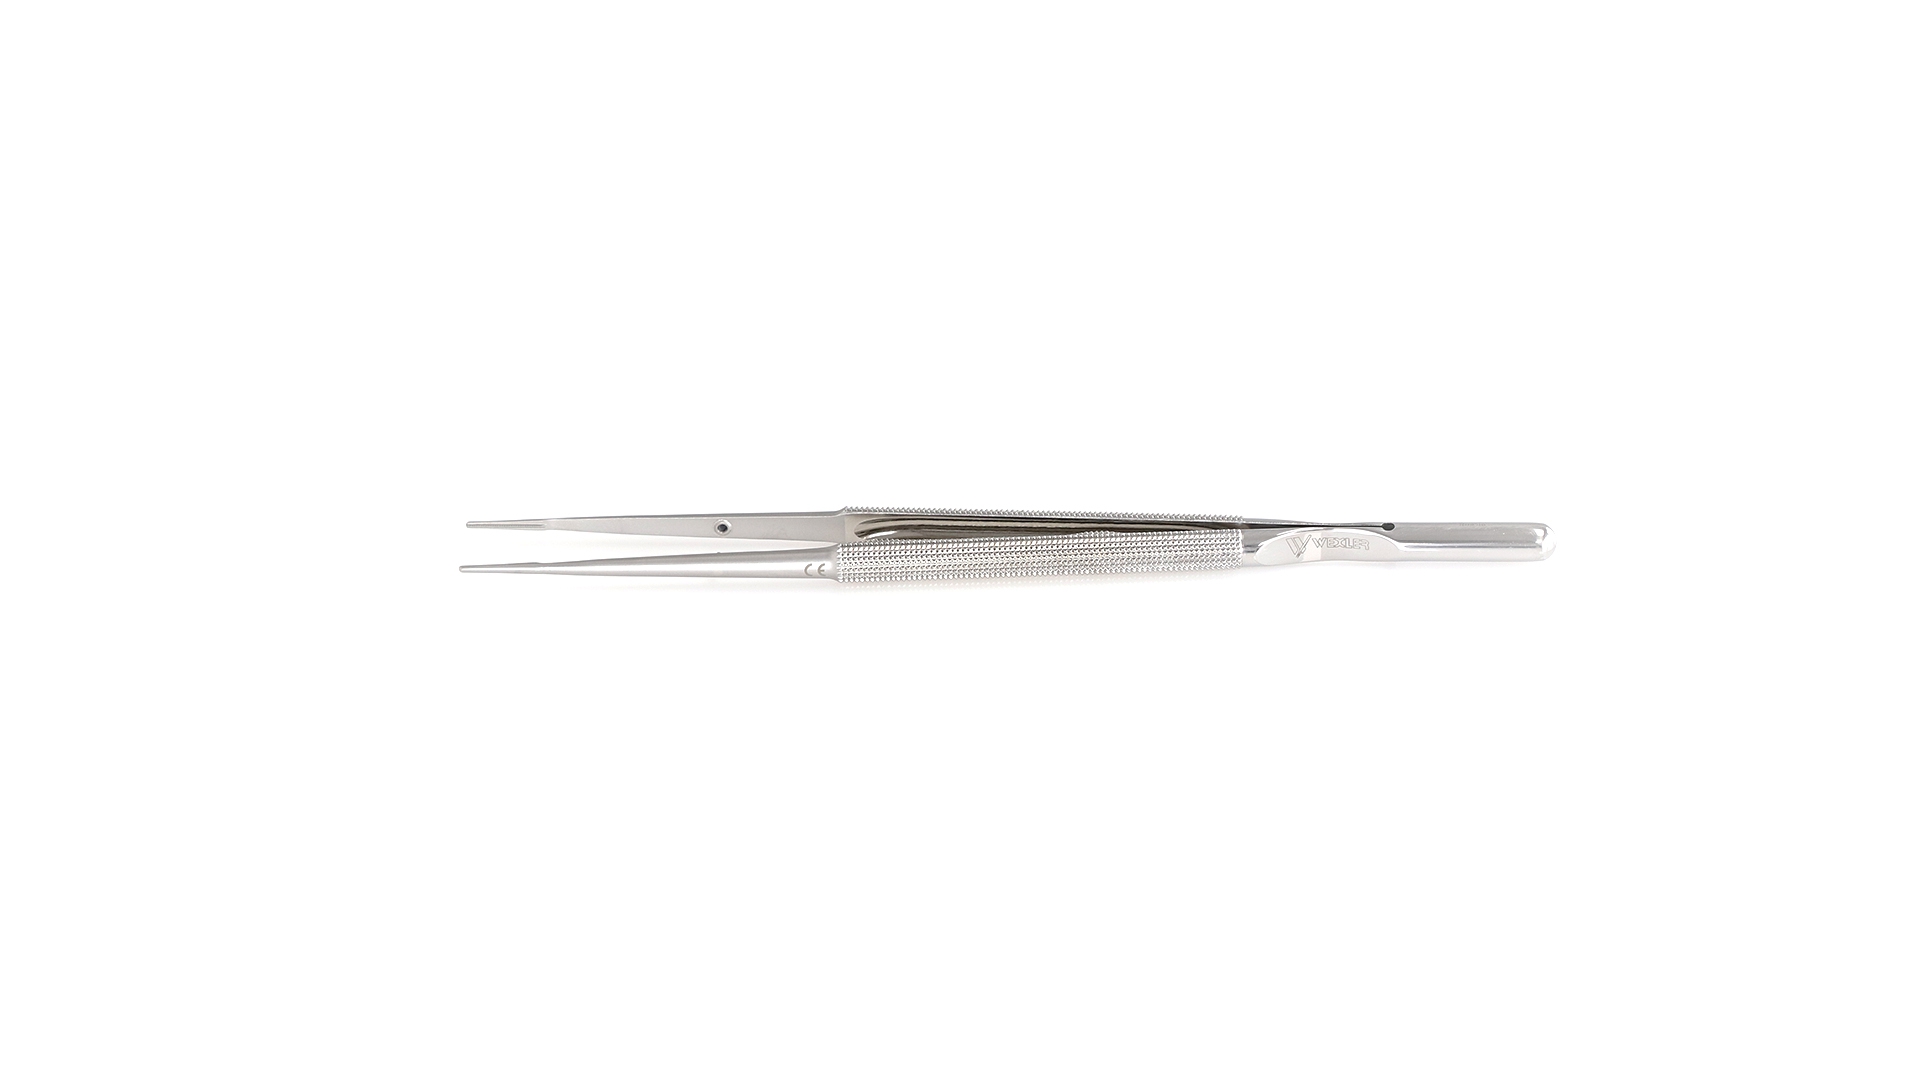 DeBakey Forceps - Straight 1.5mm tips